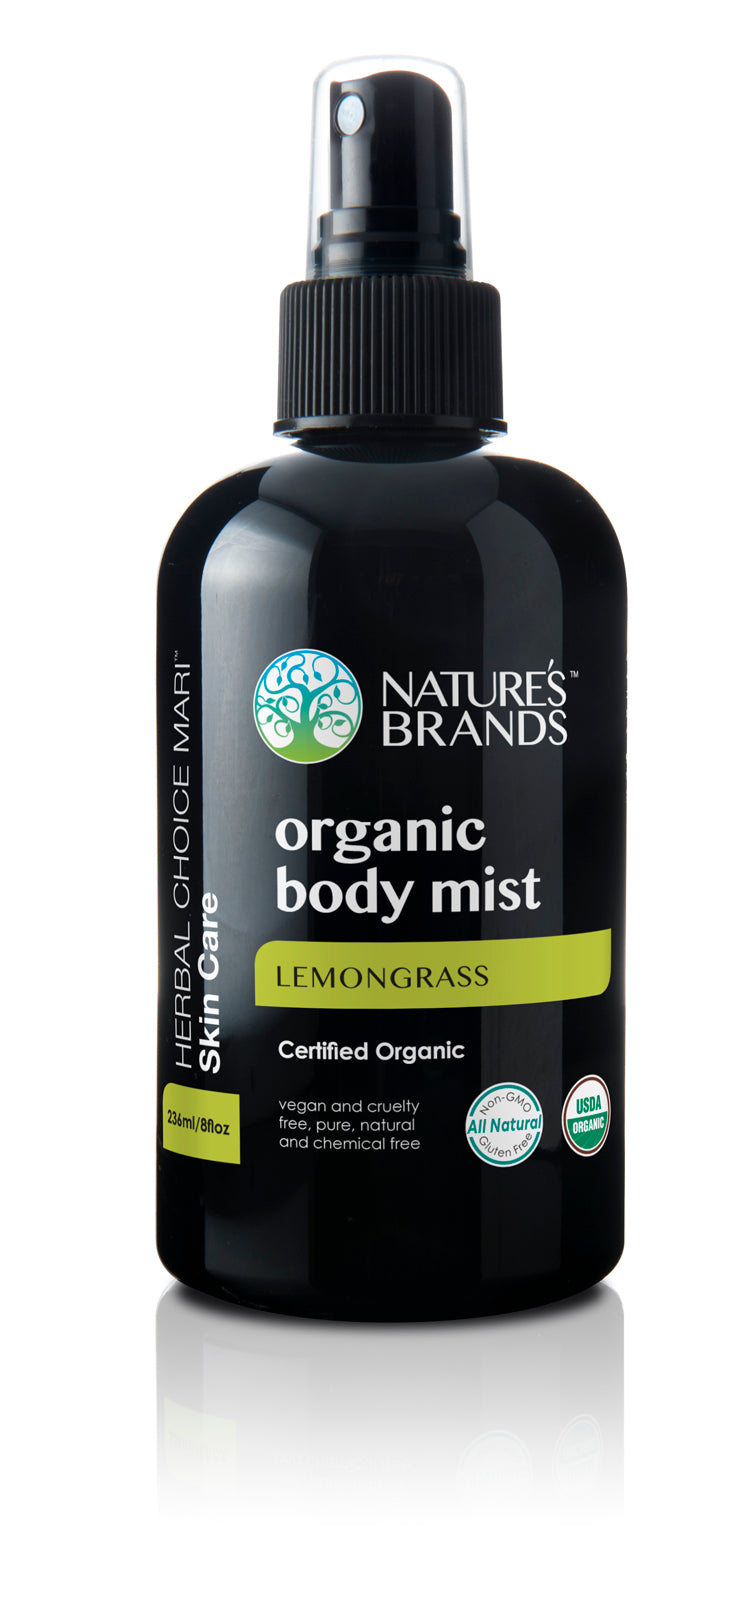 Herbal Choice Mari Organic Body Mist - Herbal Choice Mari Organic Body Mist - Herbal Choice Mari Organic Body Mist